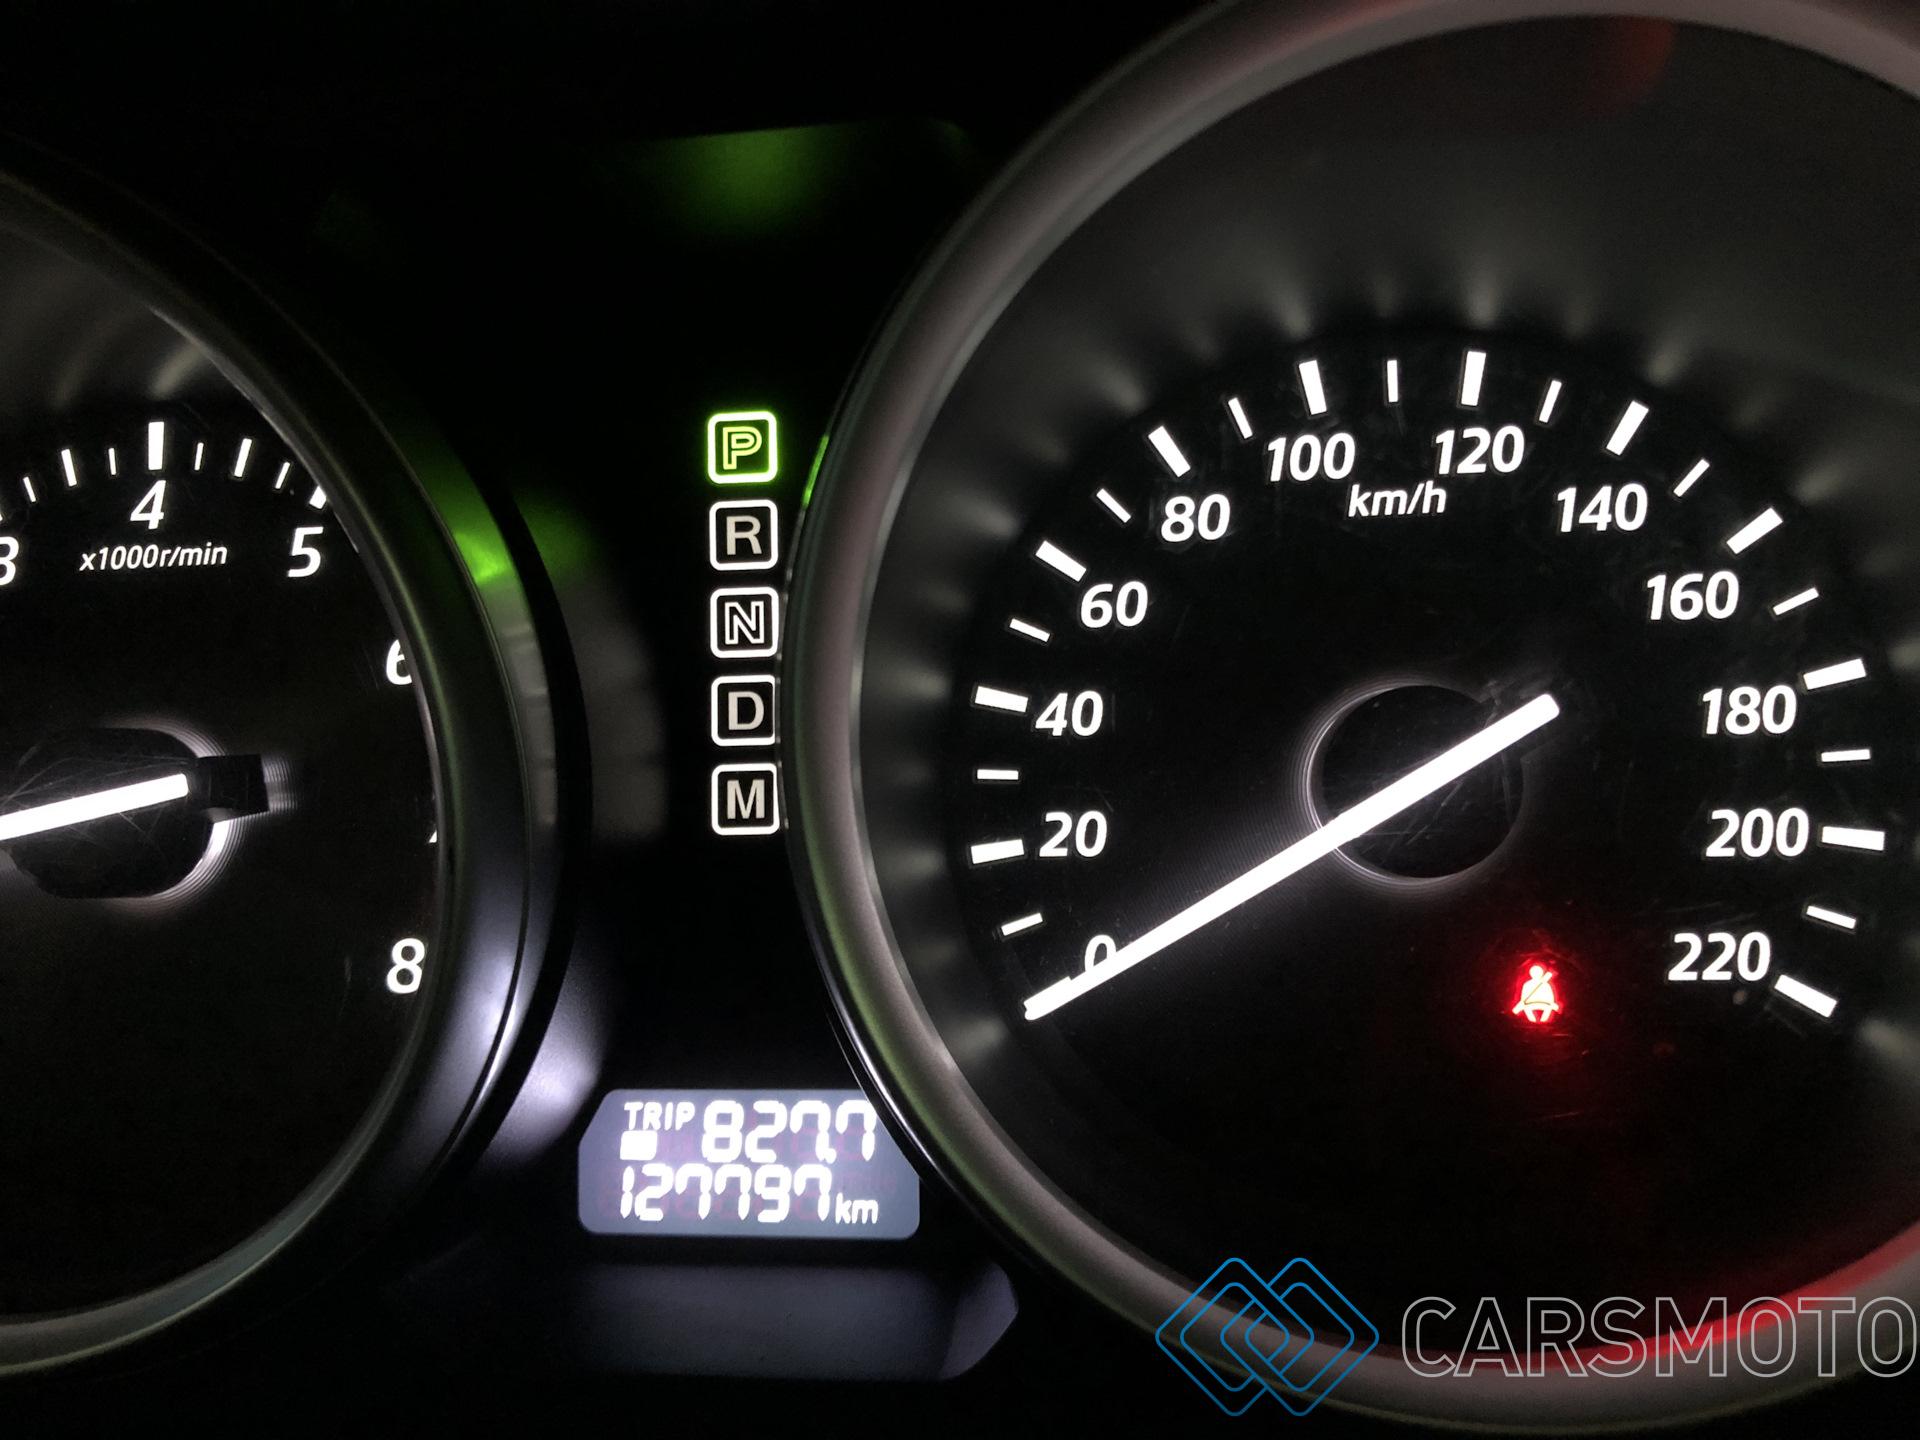 Полная аппаратная замена масла АКПП Mazda CX-9 3.7 4WD (TB)